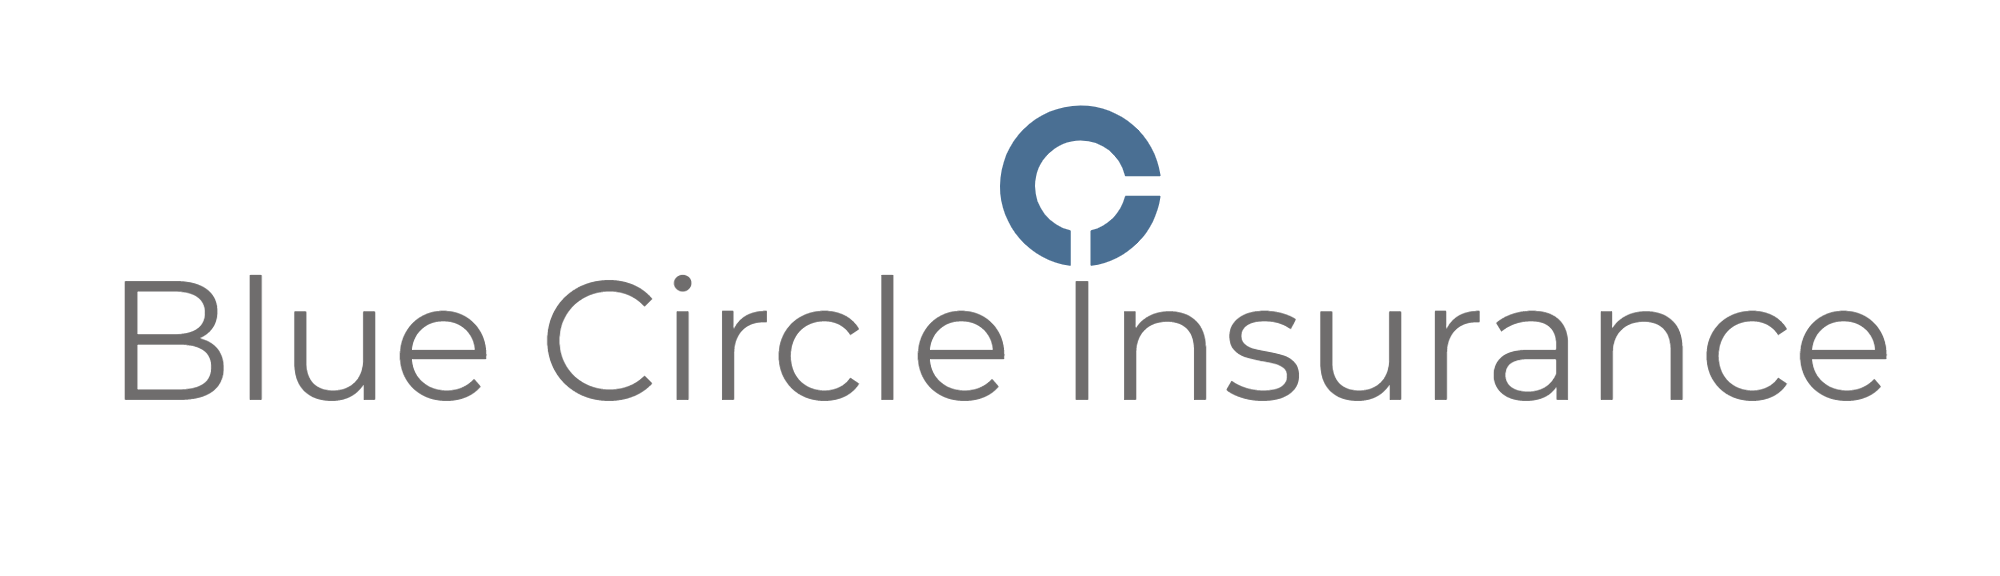 Blue Circle Insurance